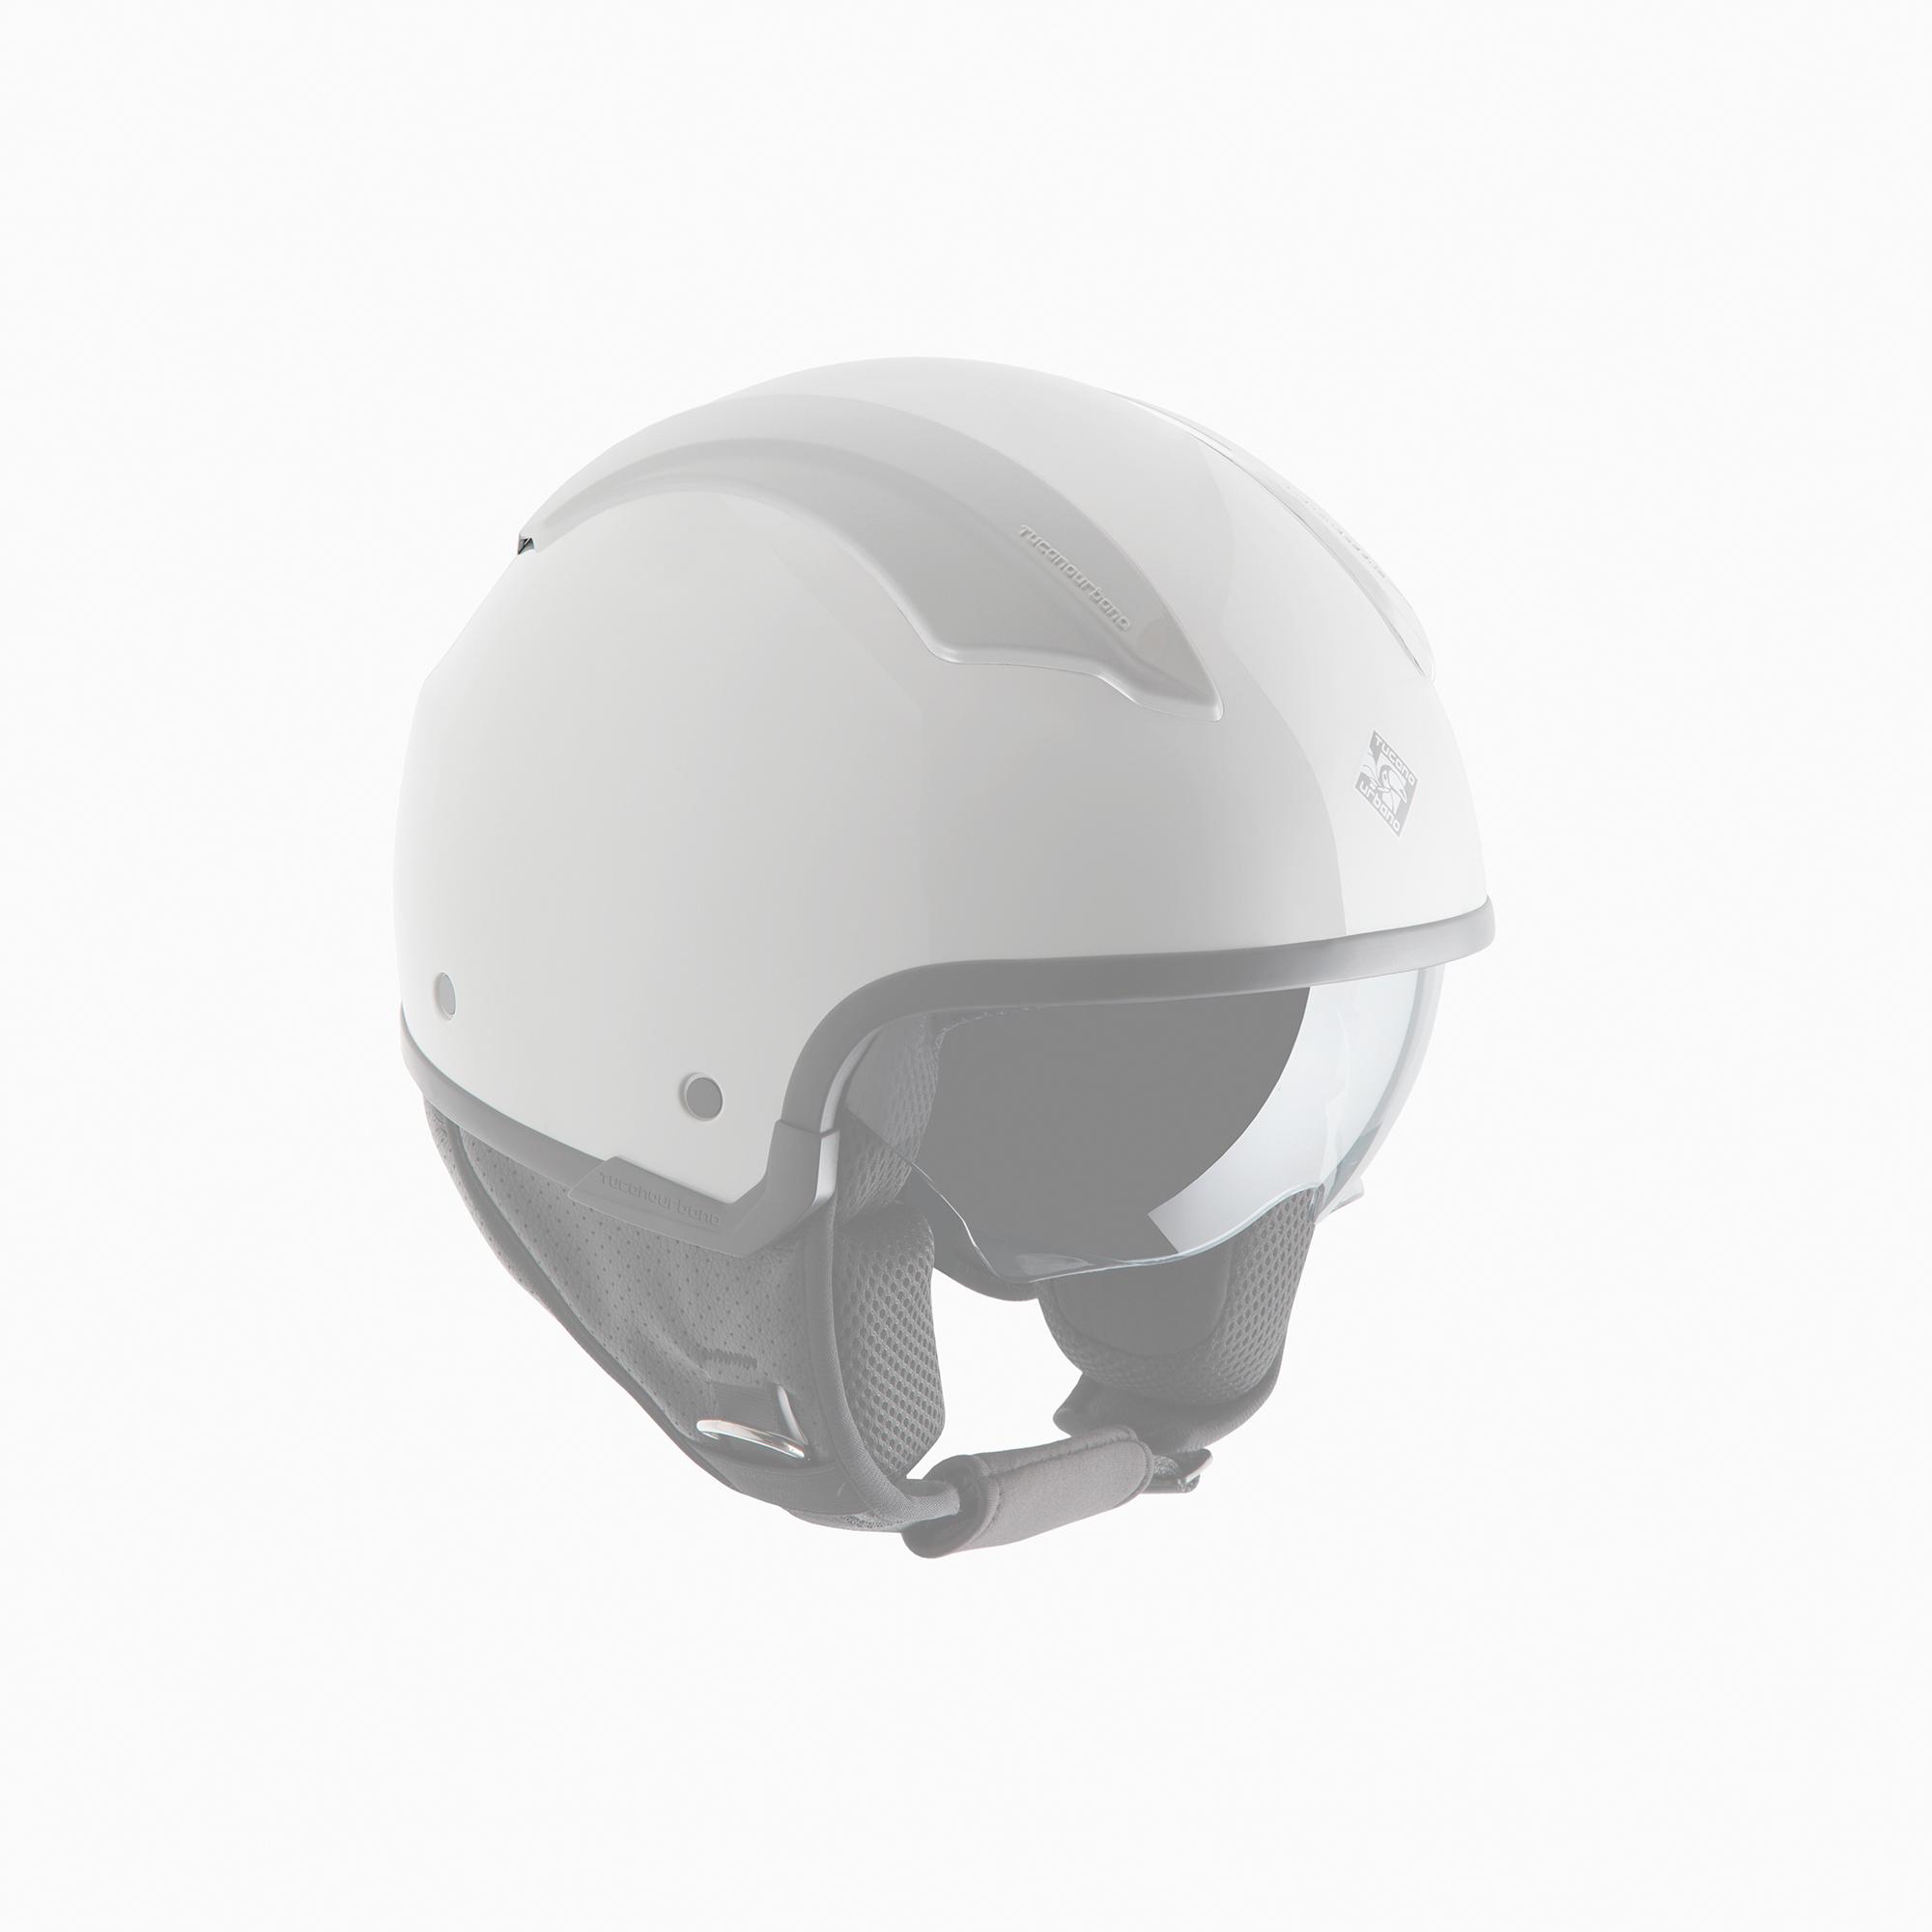 Air–ventilation Covering For El'fresh And El'top Helmet Glossy Ice White Tucano Urbano